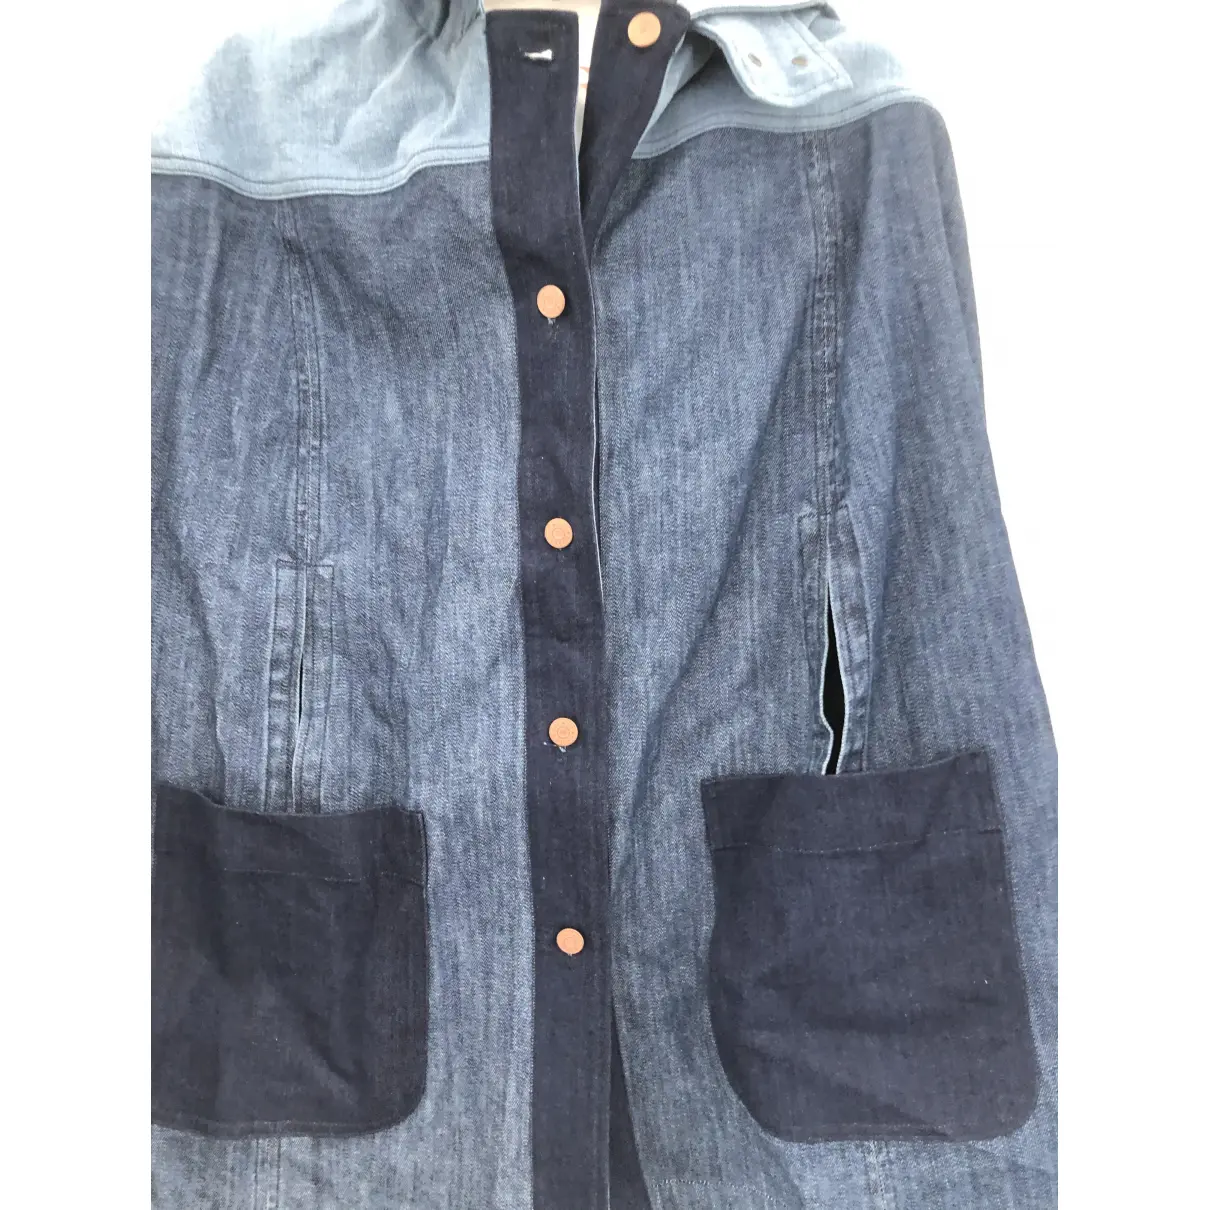 Buy See by Chloé Blue Denim - Jeans Jacket online